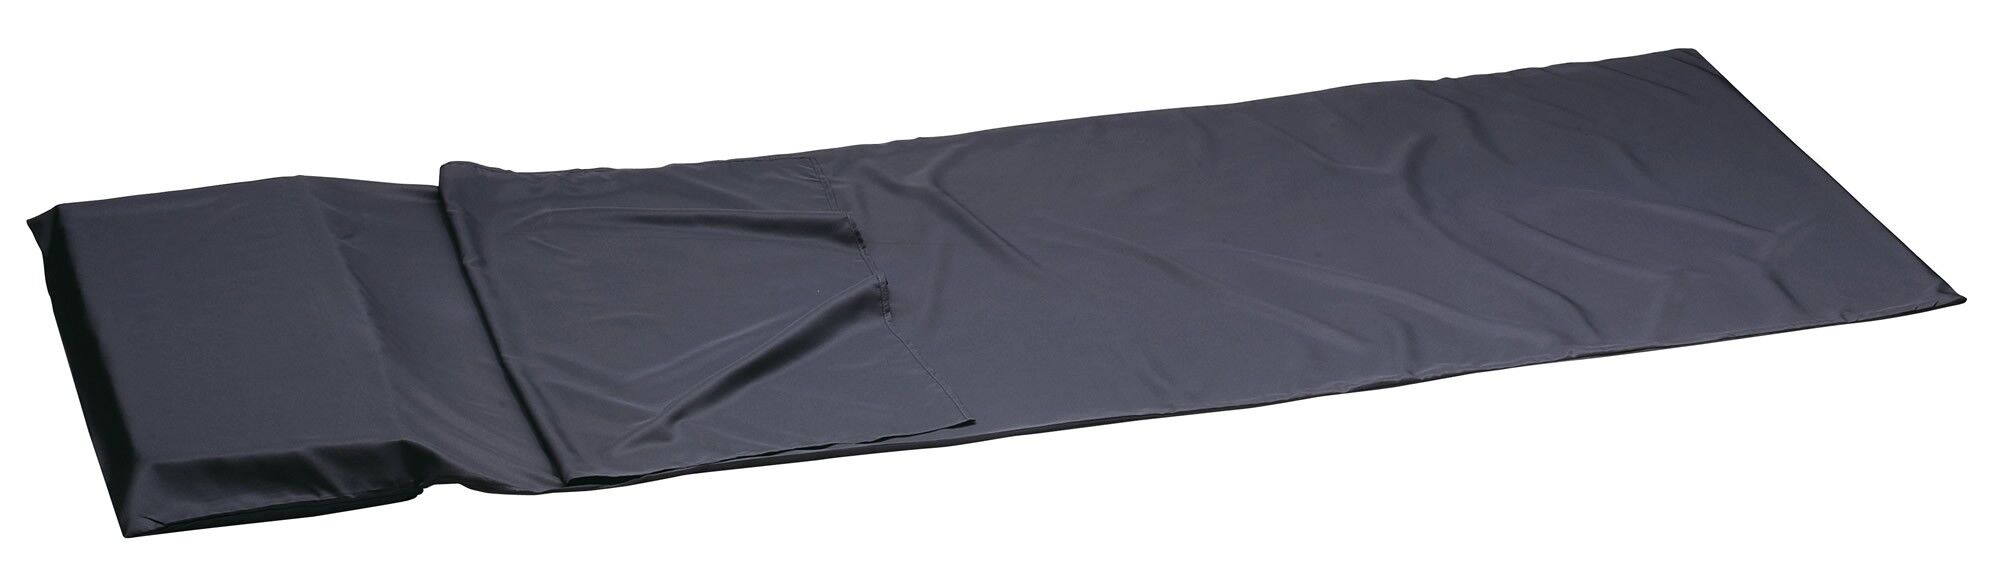 Camp Lining Microfibre - Sleeping bag liner